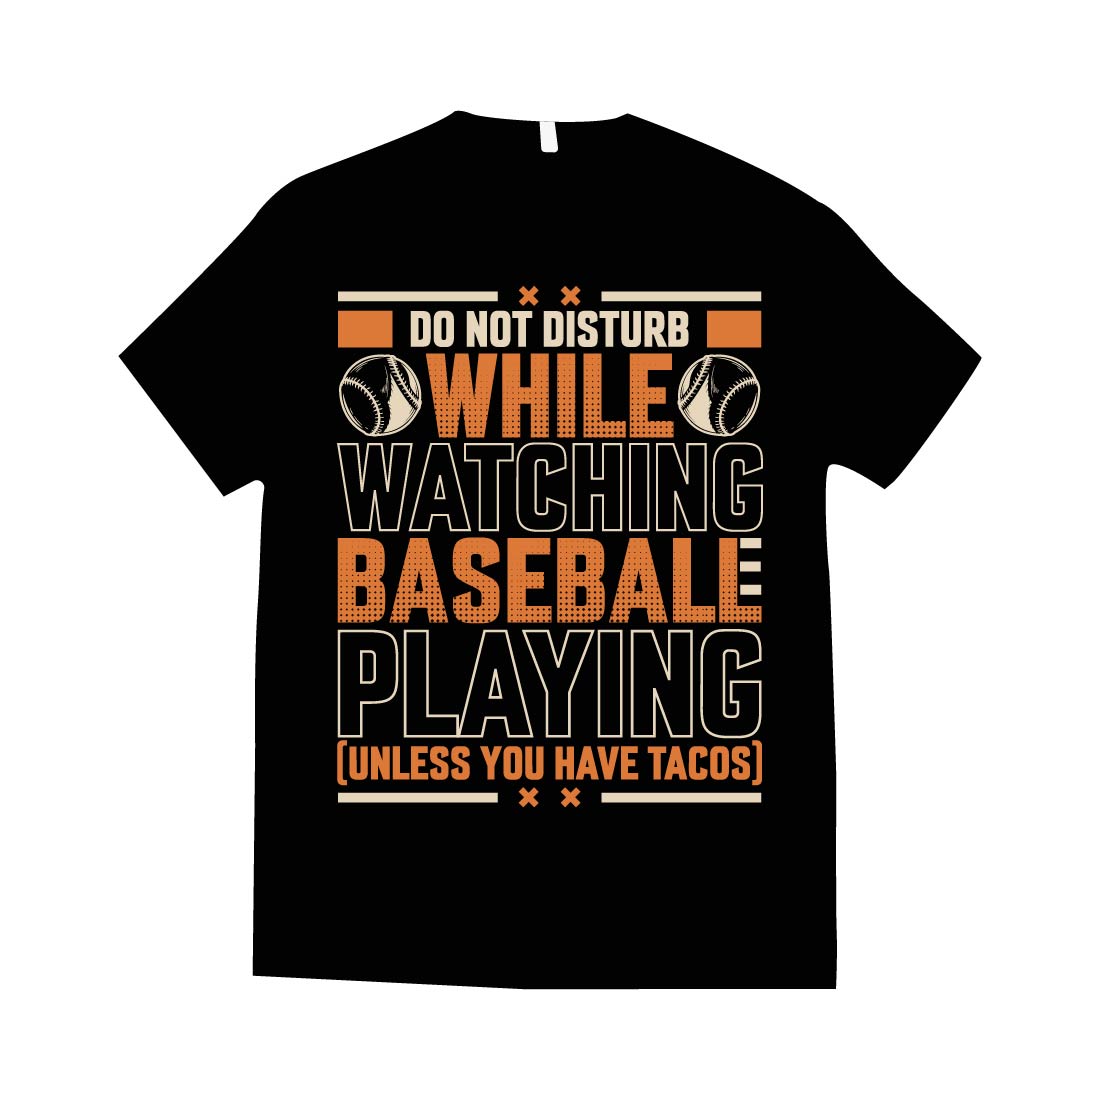 Baseball T-shirt Design, Do not disturb while watching baseball playing preview image.